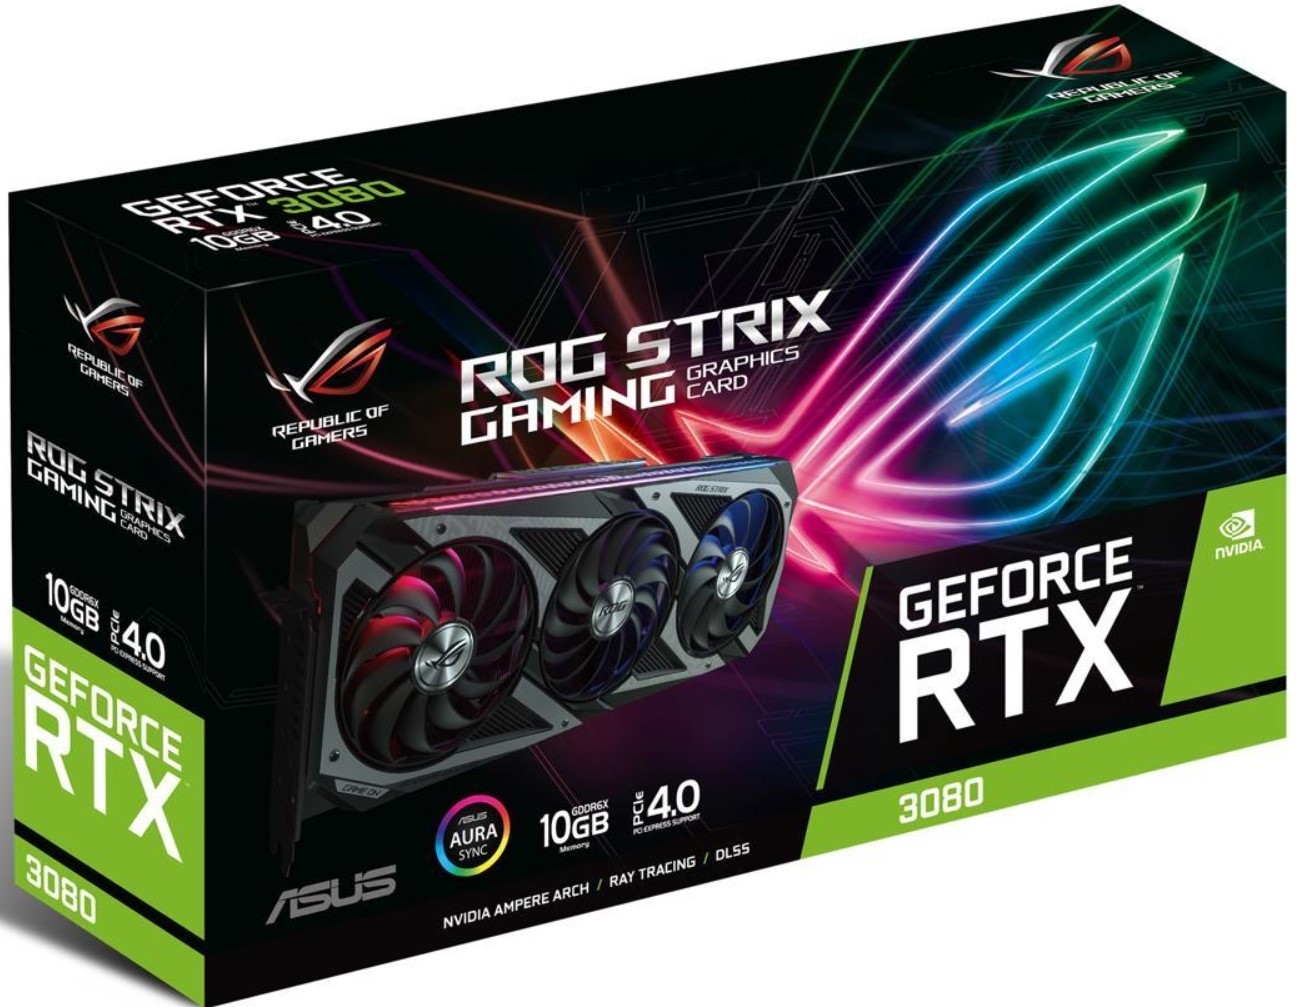 GeForce RTX 3090/RTX 3080/3080 Ti/3070/3060i/ RX